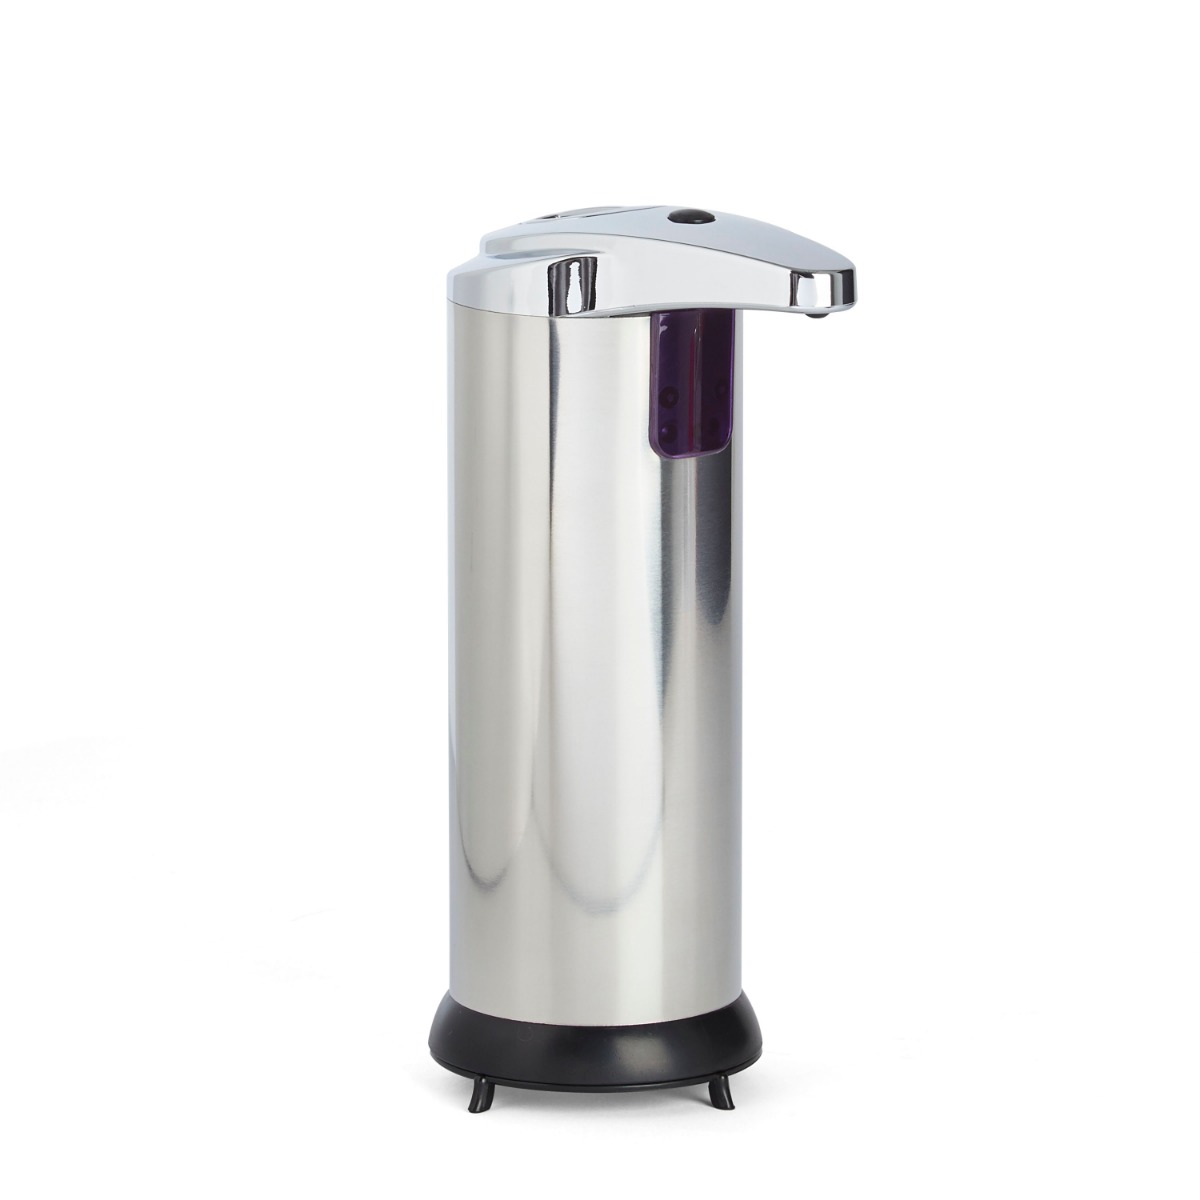 TOUCHLESS Hands Free 225ml Soap and Sanitiser Dispenser - Stainless Steel